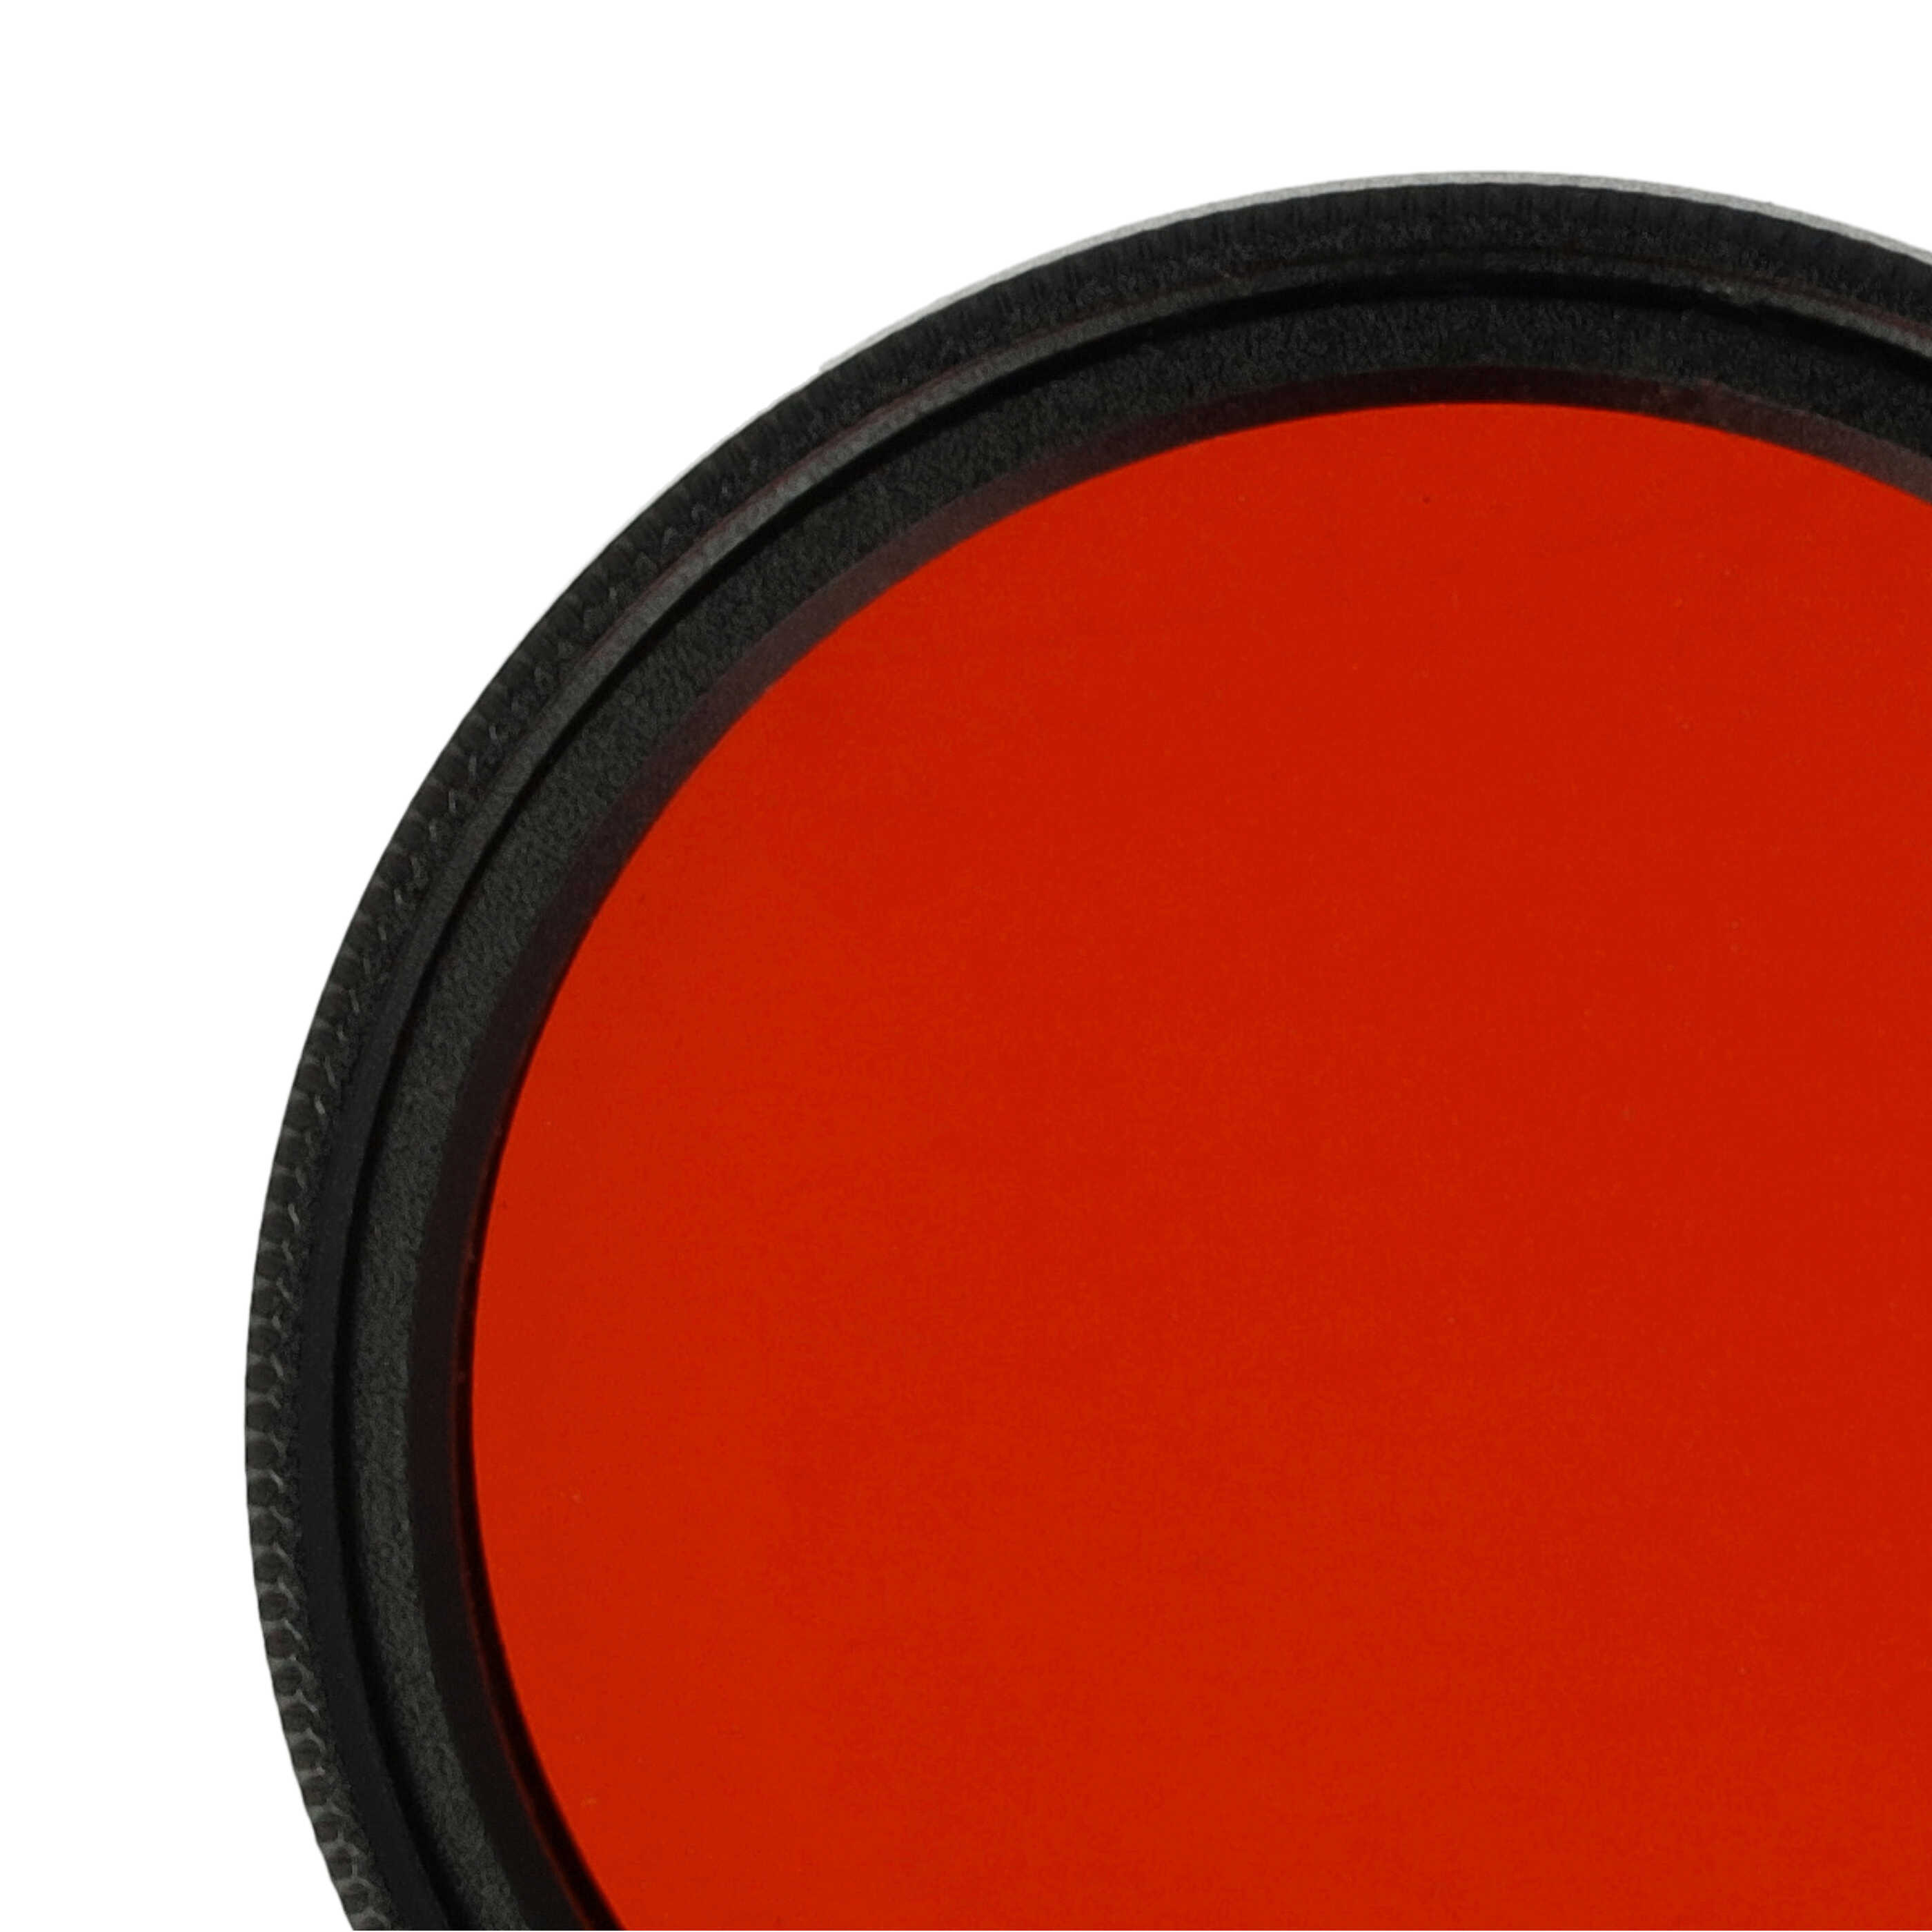 Coloured Filter, Orange suitable for Camera Lenses with 37 mm Filter Thread - Orange Filter